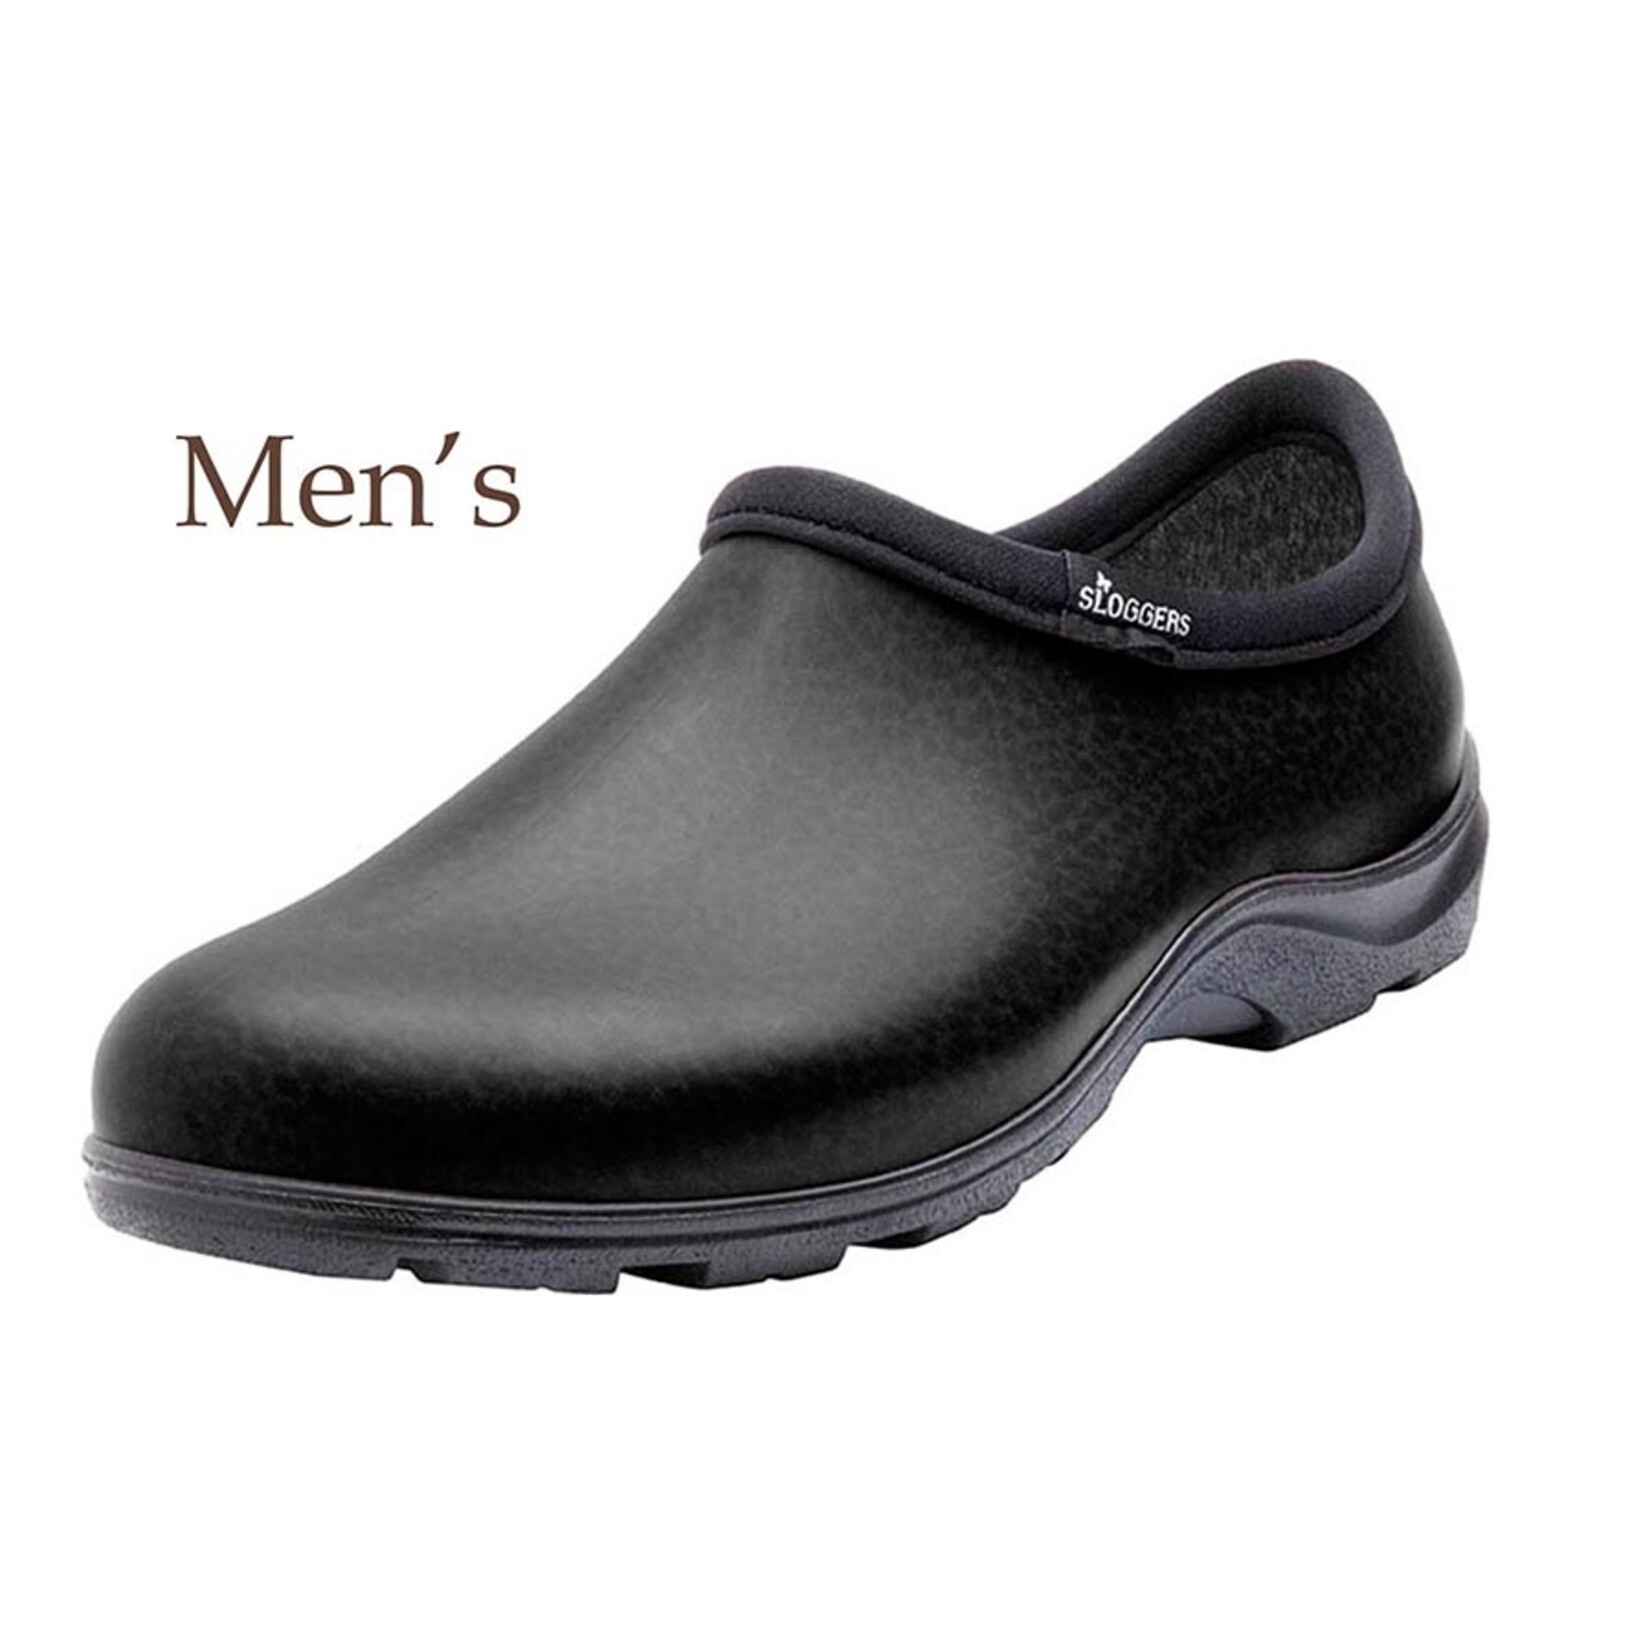 Sloggers Garden Shoe Men's Black Size 9